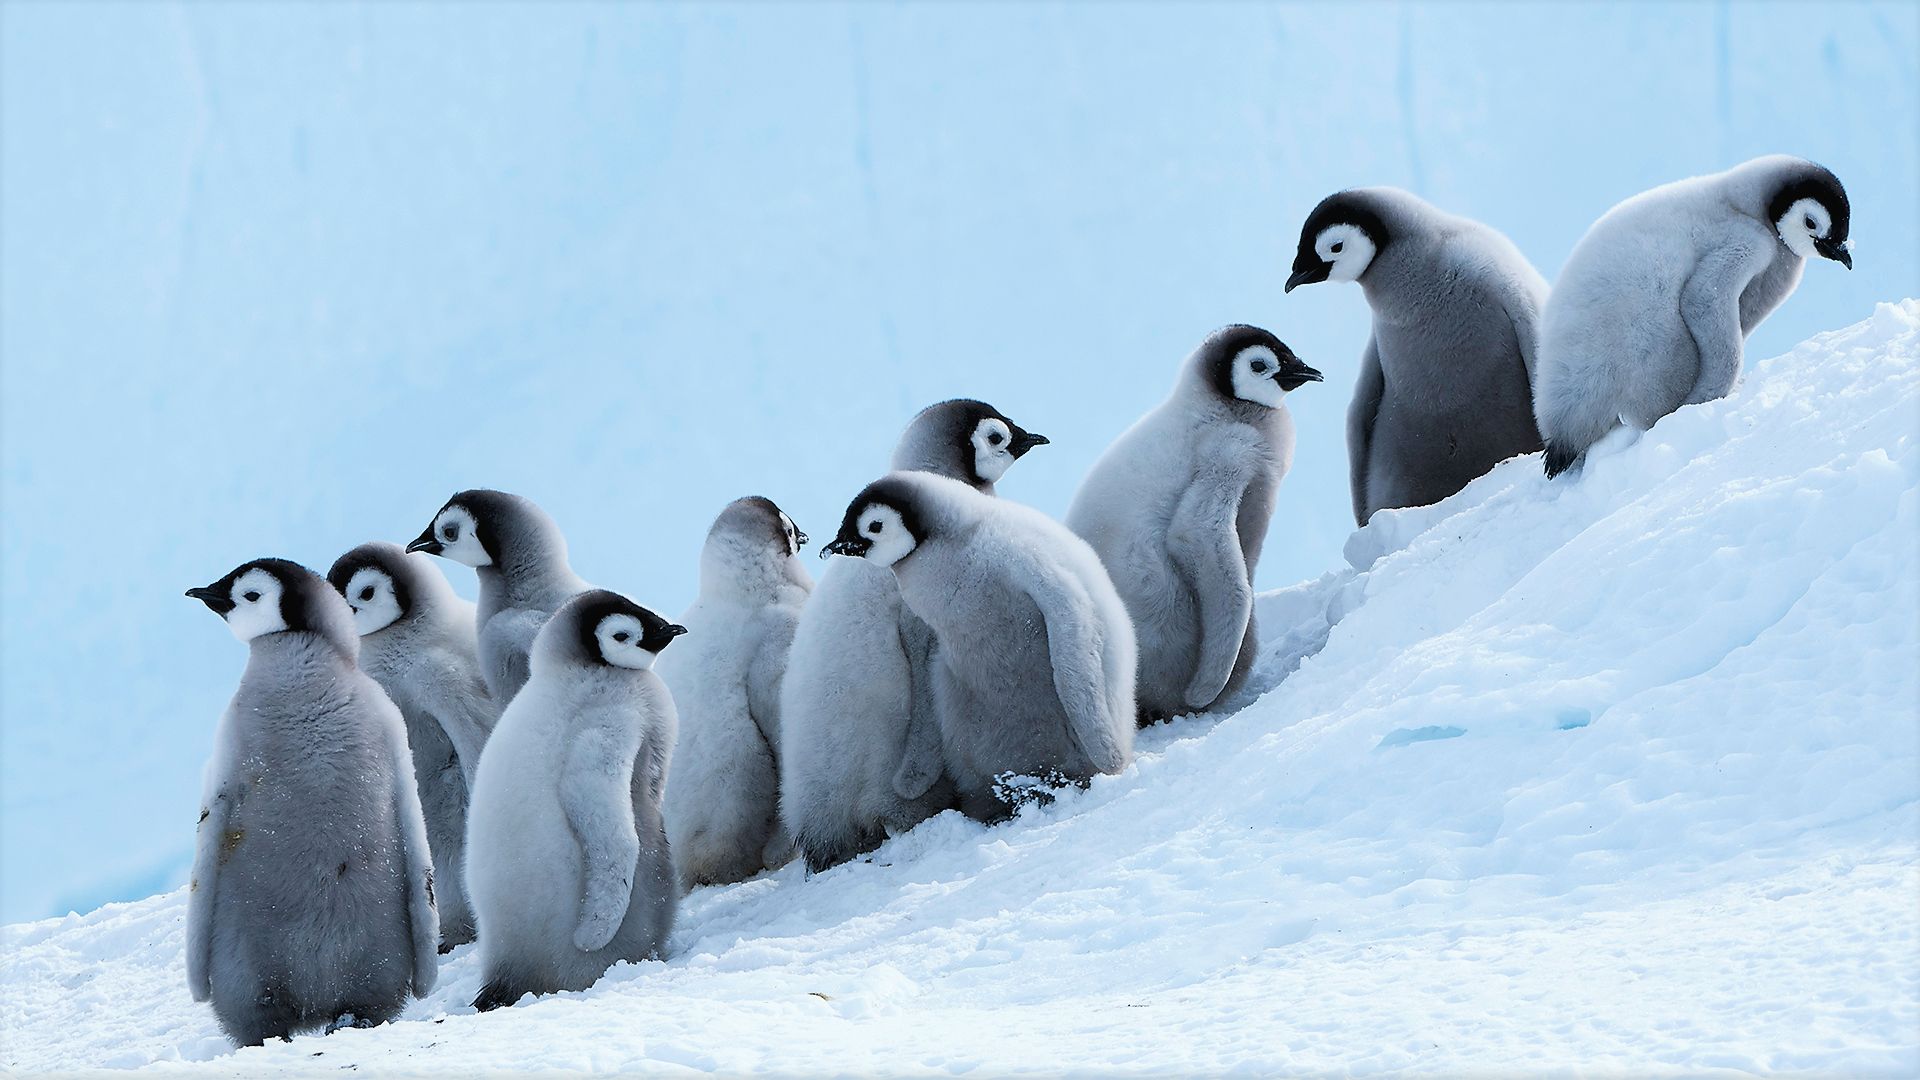 penguin, emperor penguin, animal, bird, chick, cute, birds